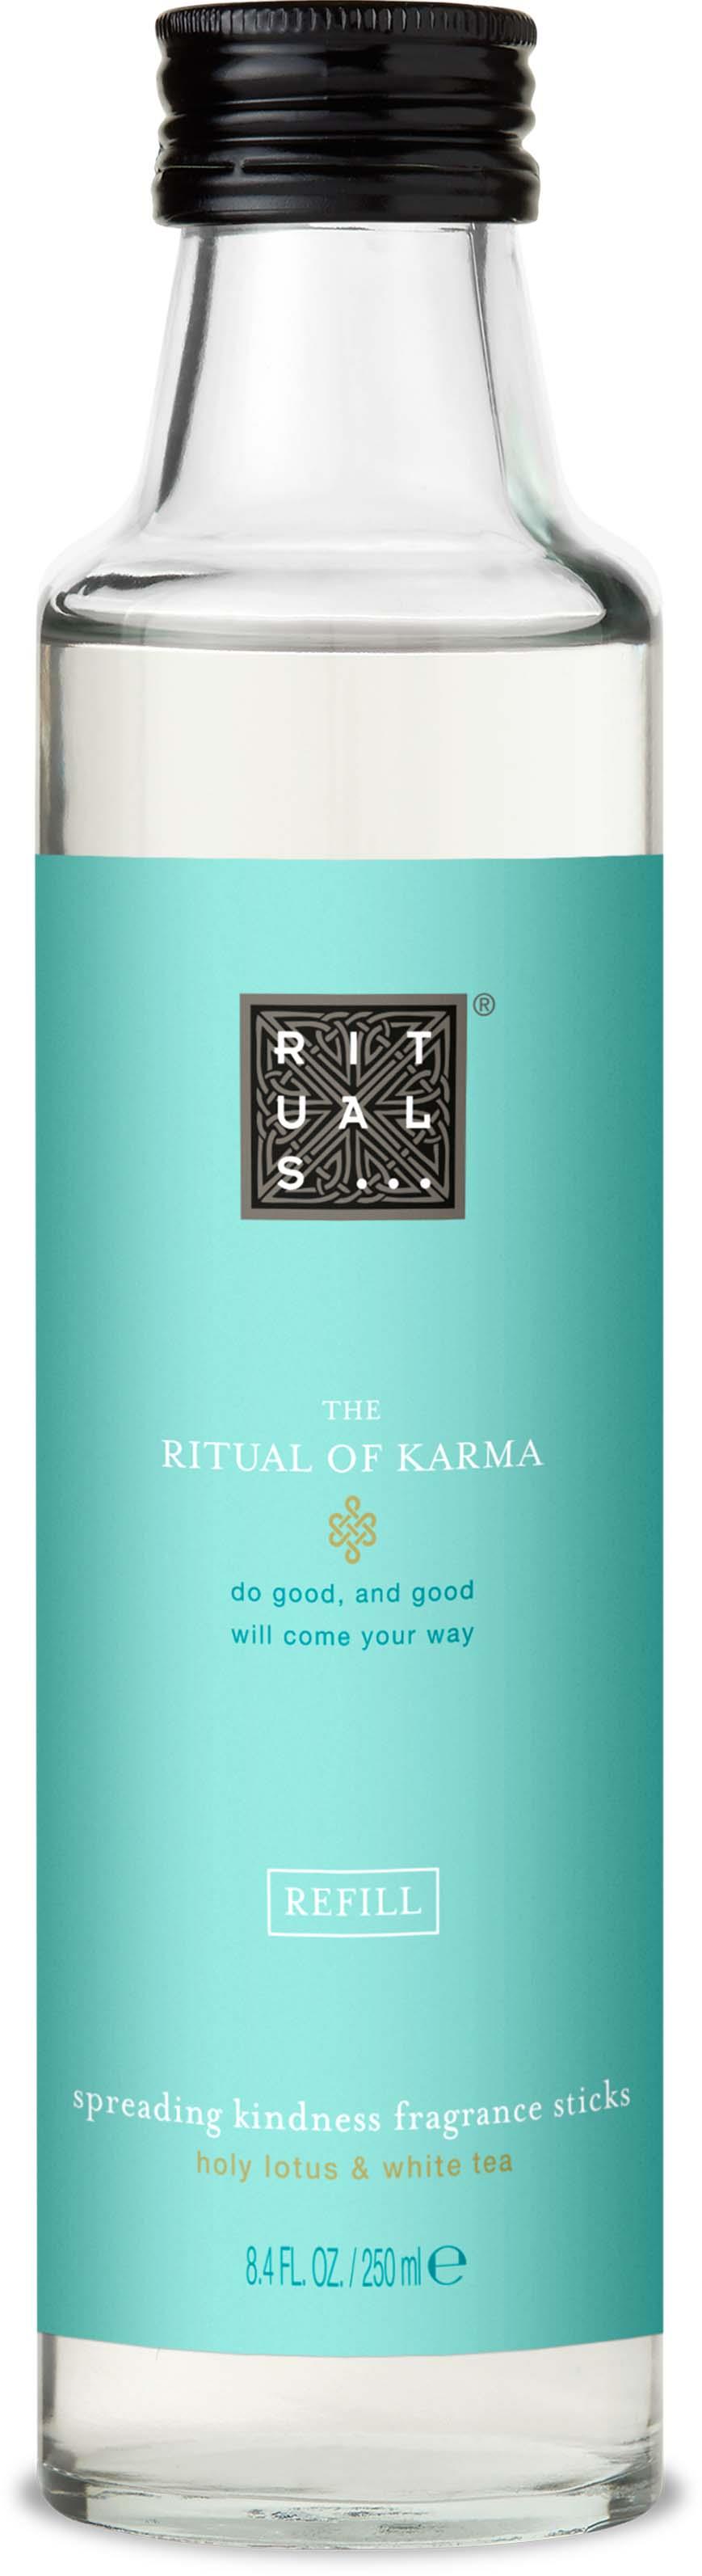 Rituals The Ritual of Karma Refill for Fragrance Sticks